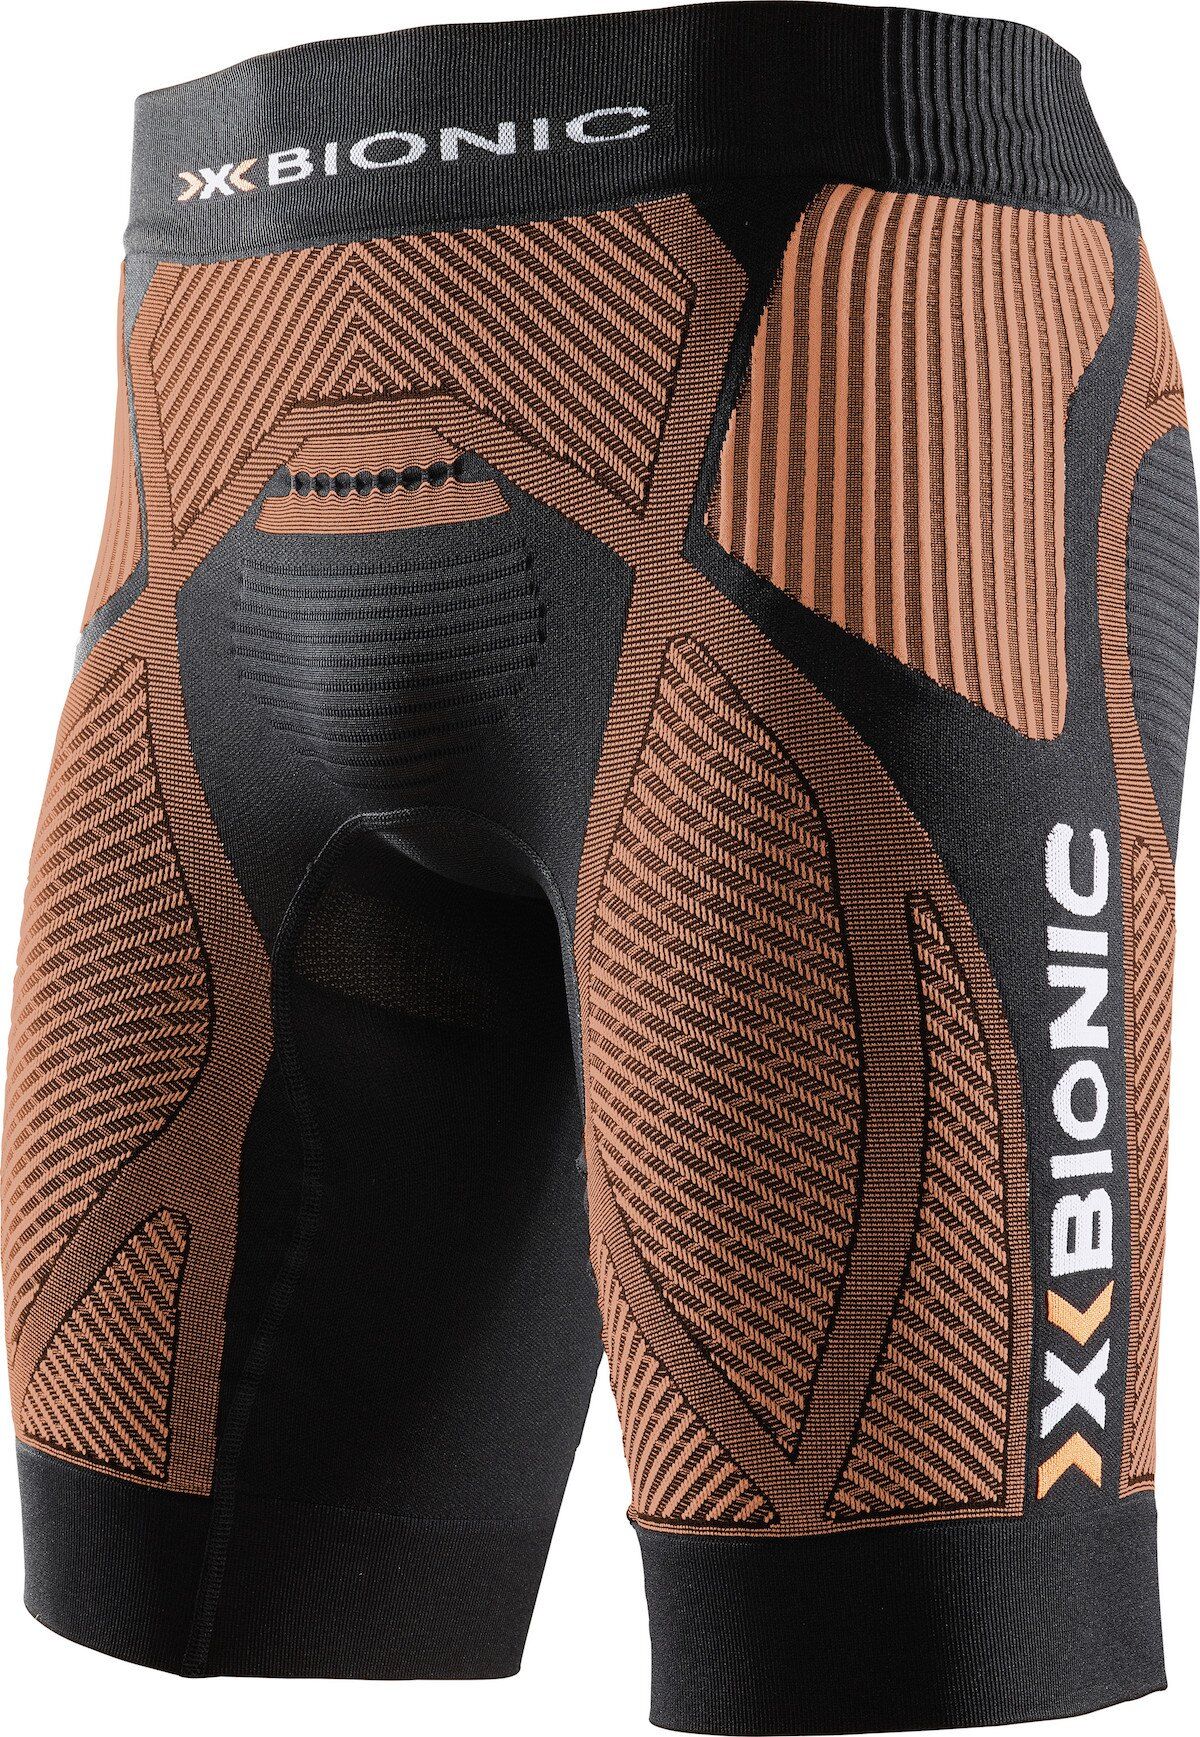 X-Bionic - The Trick - Running shorts - Men's